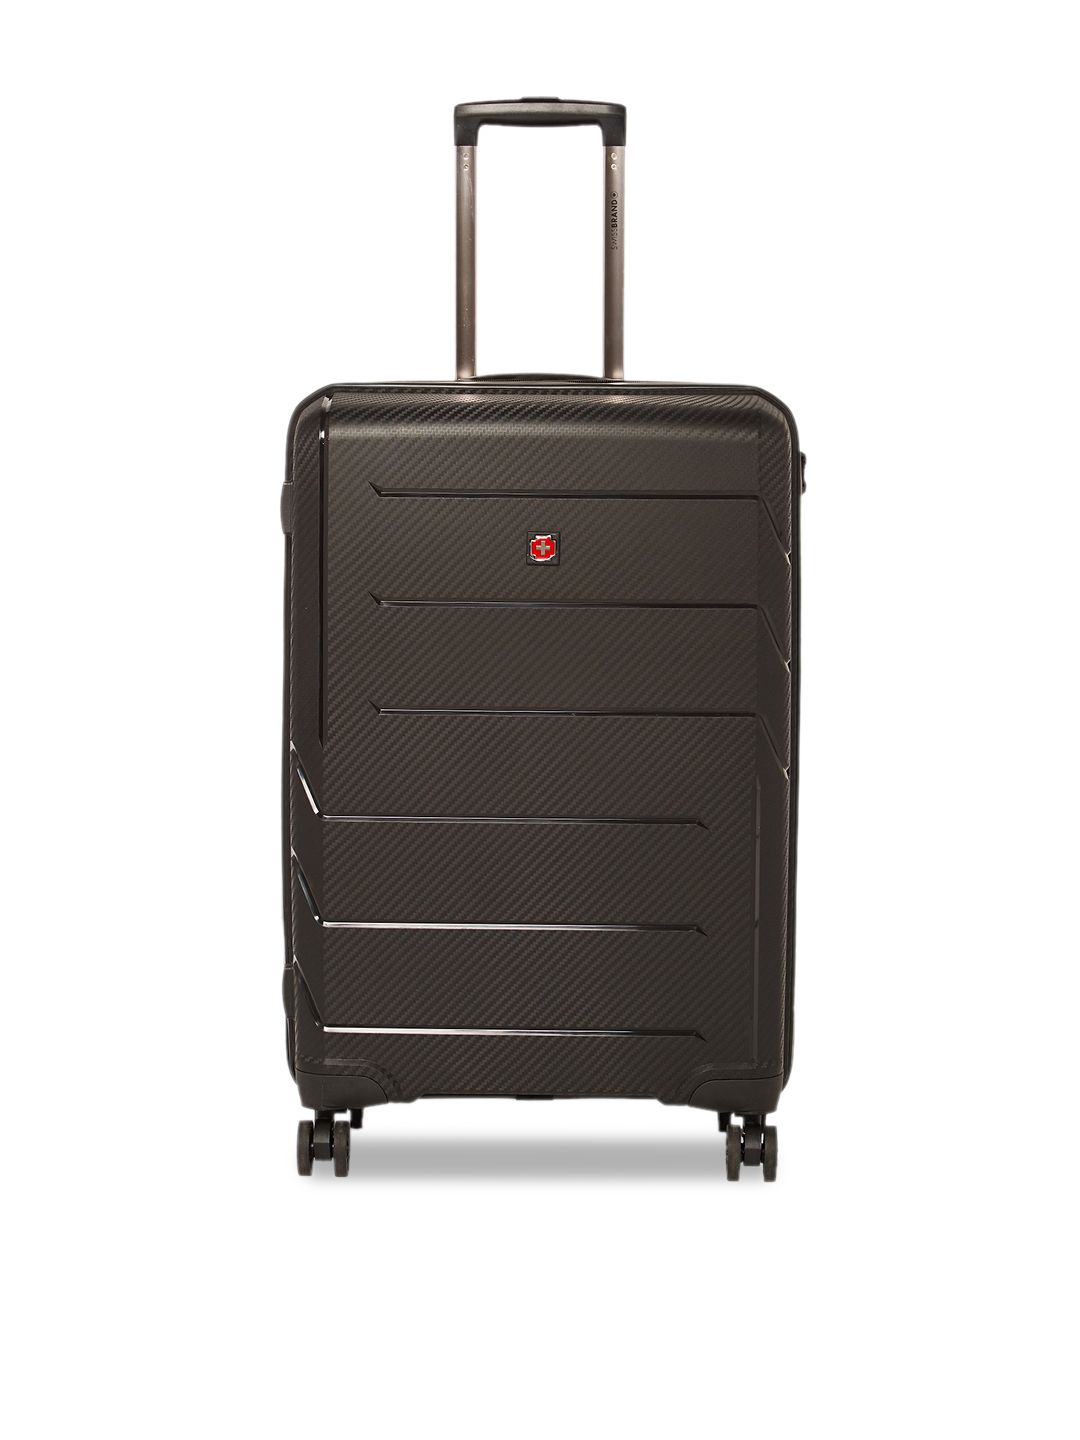 SWISS BRAND Black Solid MATTERHORN Hard-Sided Medium Trolley Suitcase Price in India